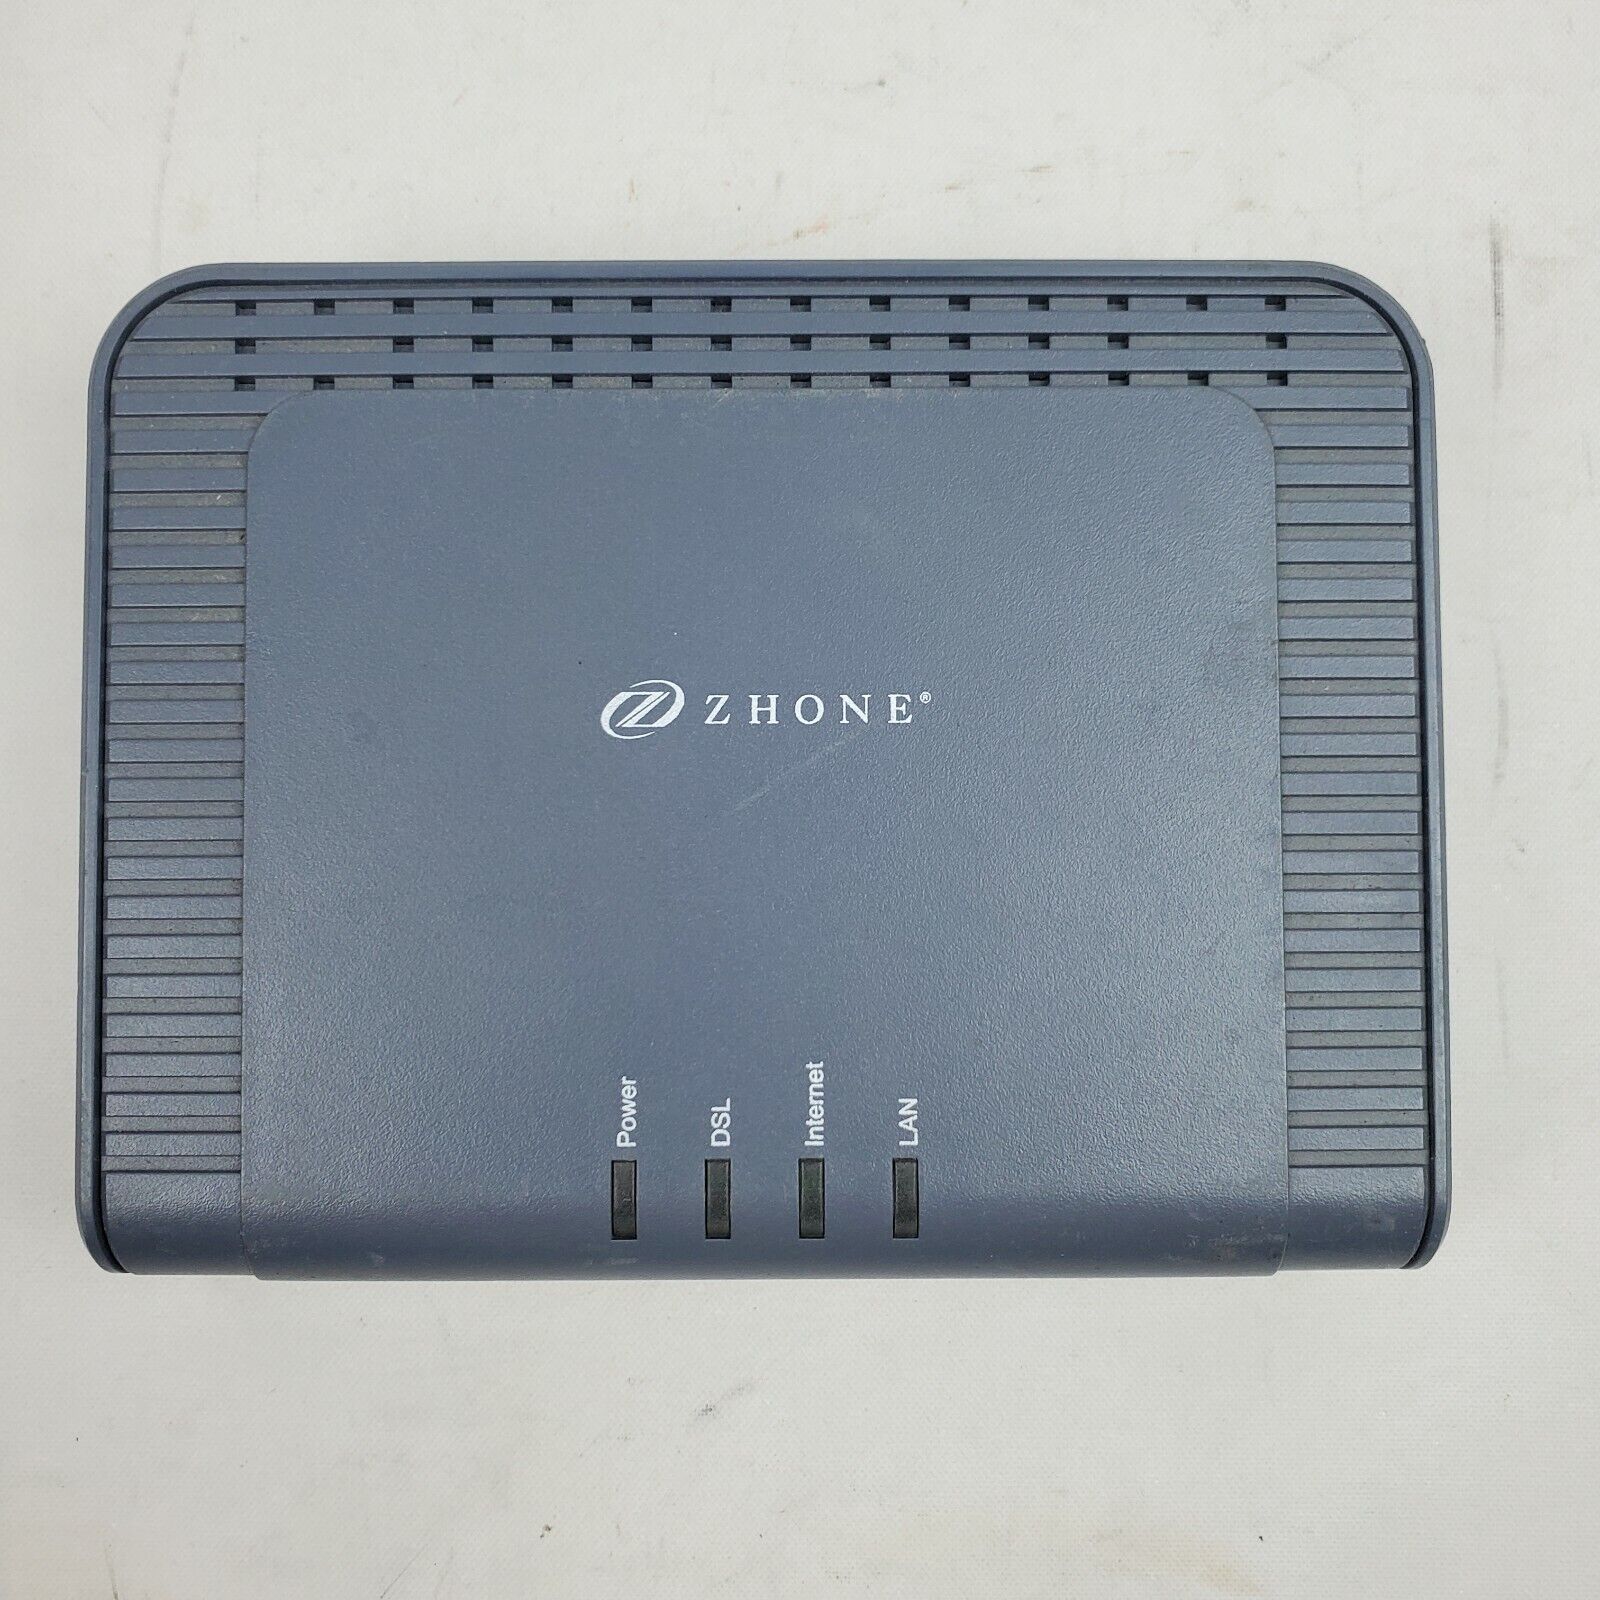 Zhone 1511-A1-NA  ADSL2+ Gray DSL Internet Single Port Bridge Router Modem